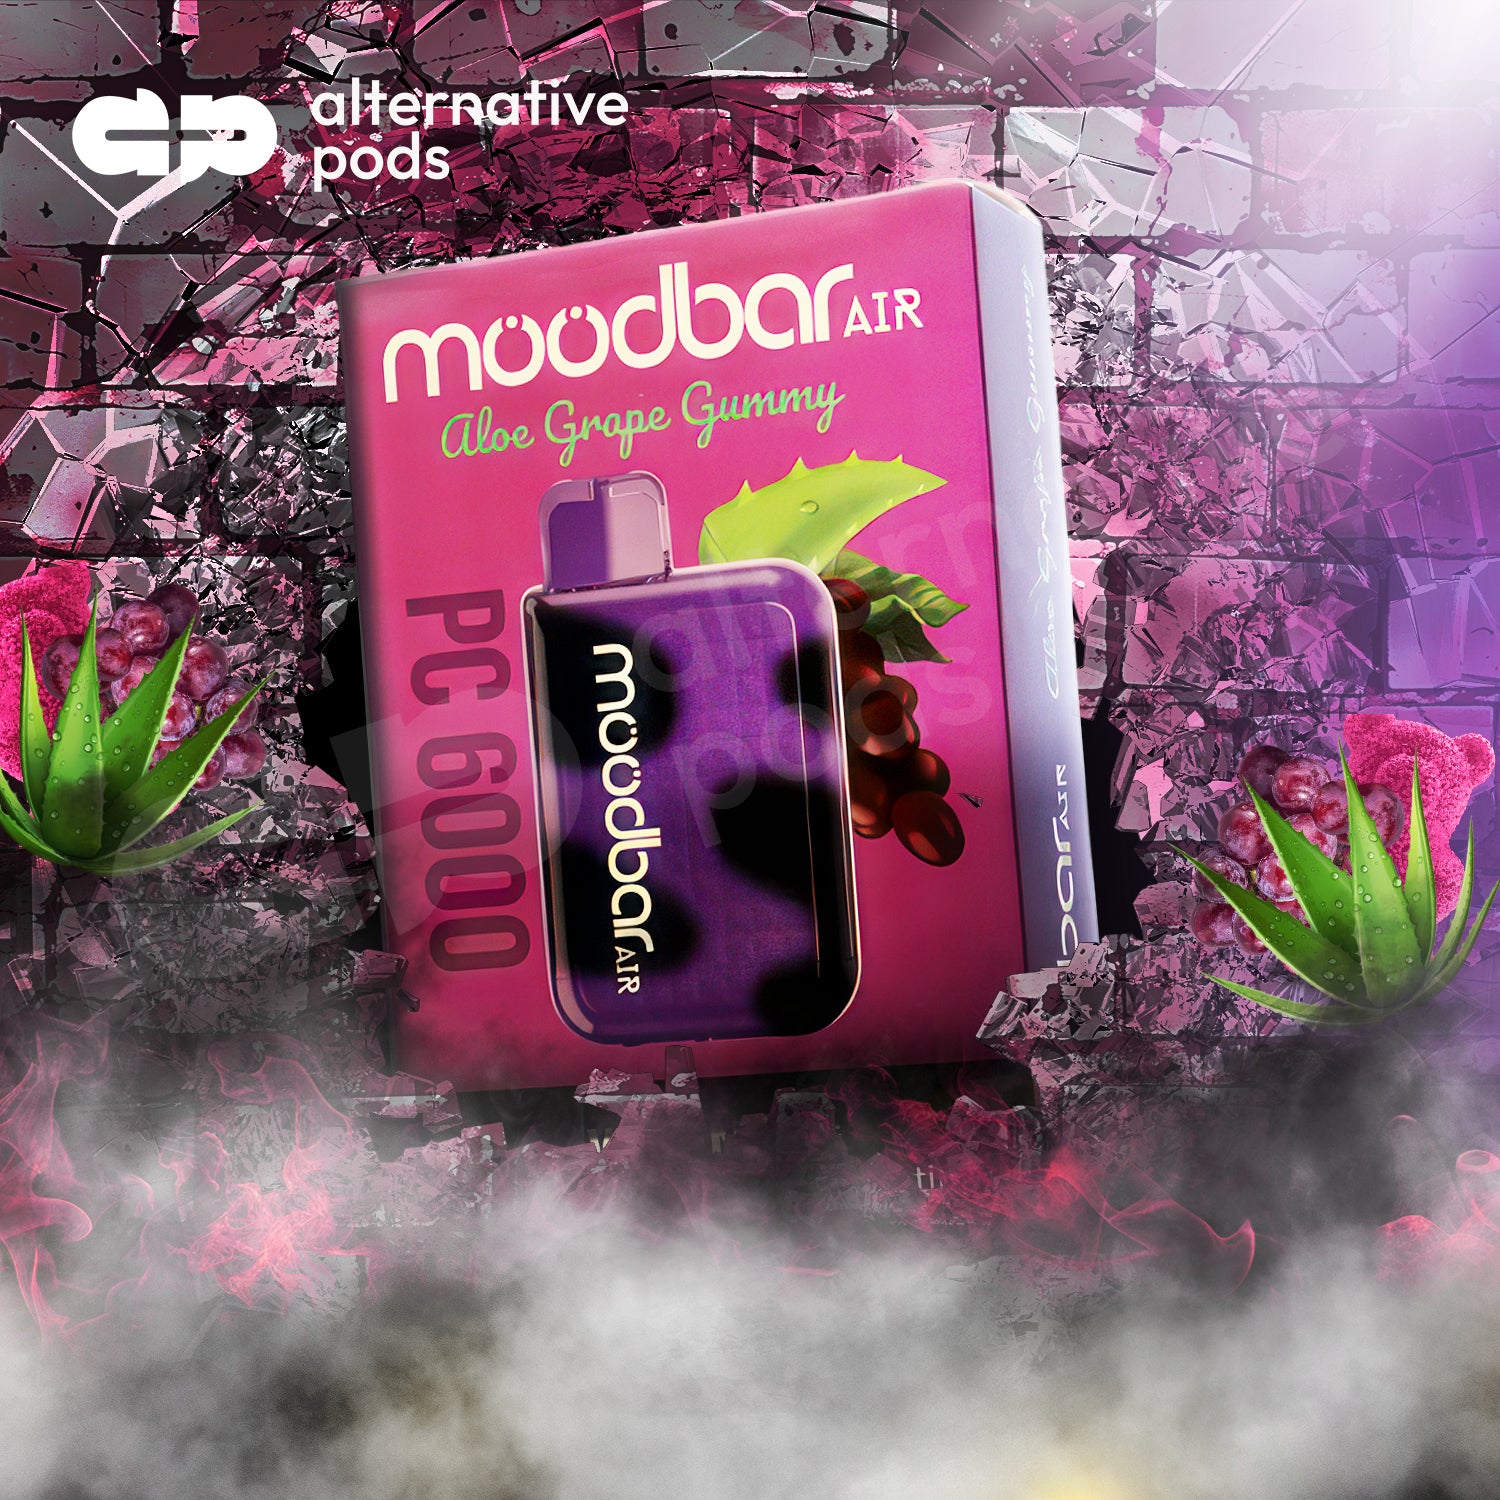 MoodBar Air PC6000 - Alow Grape Gummy 